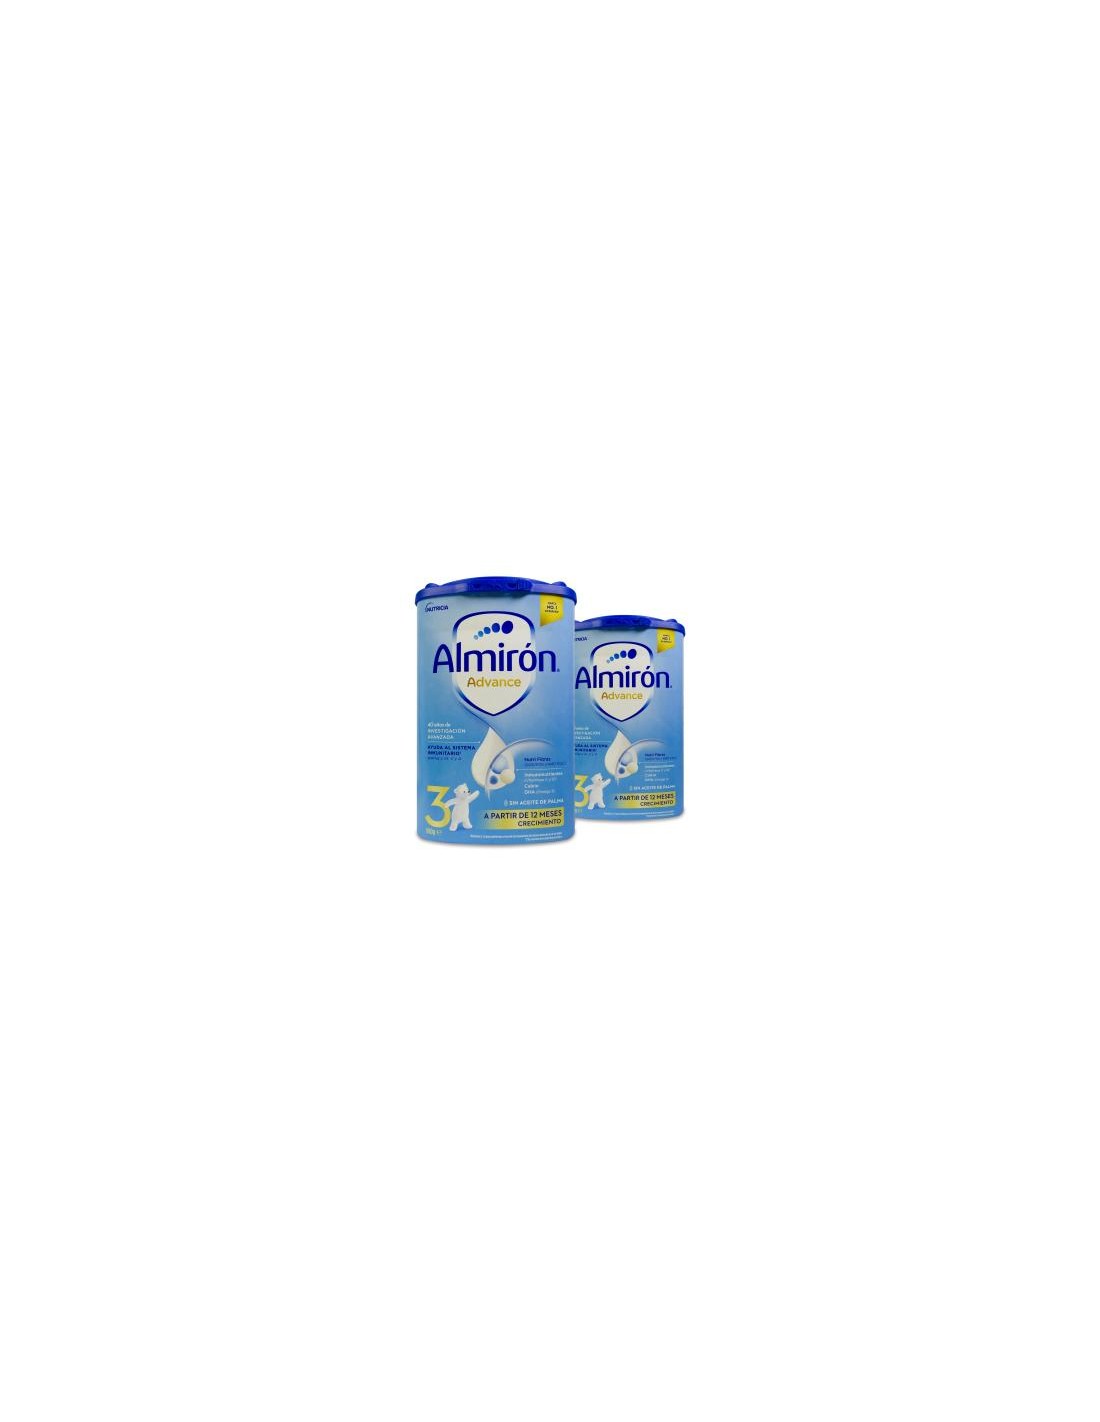 Almiron Advance + Pronutra 3 2 Envases 800 G Pack Ahorro 50%